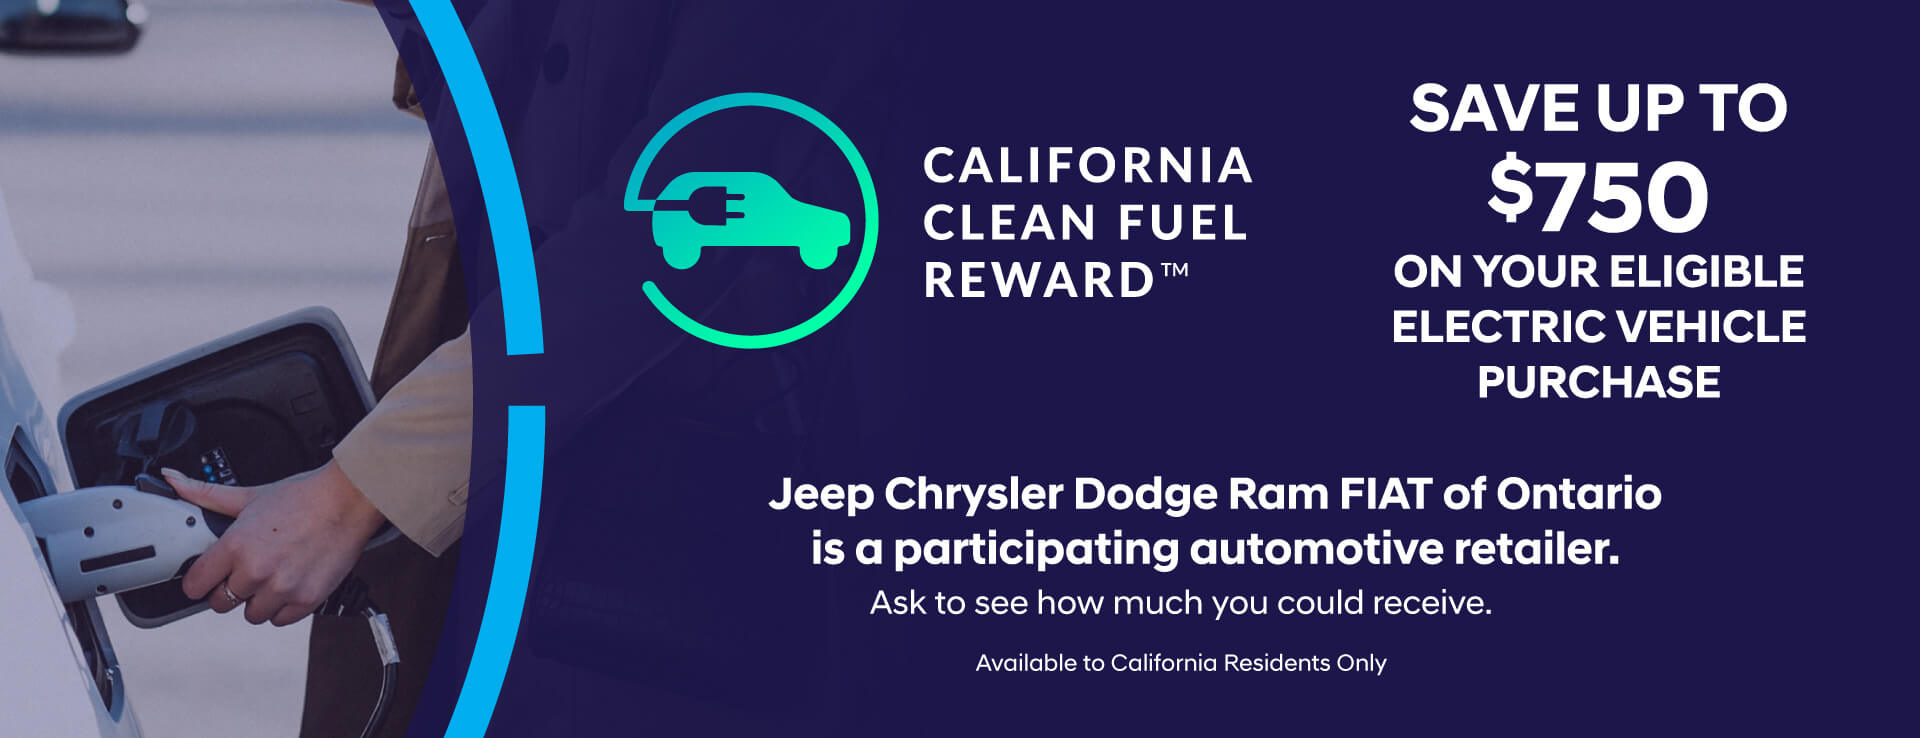 California Clean Fuel Reward banner